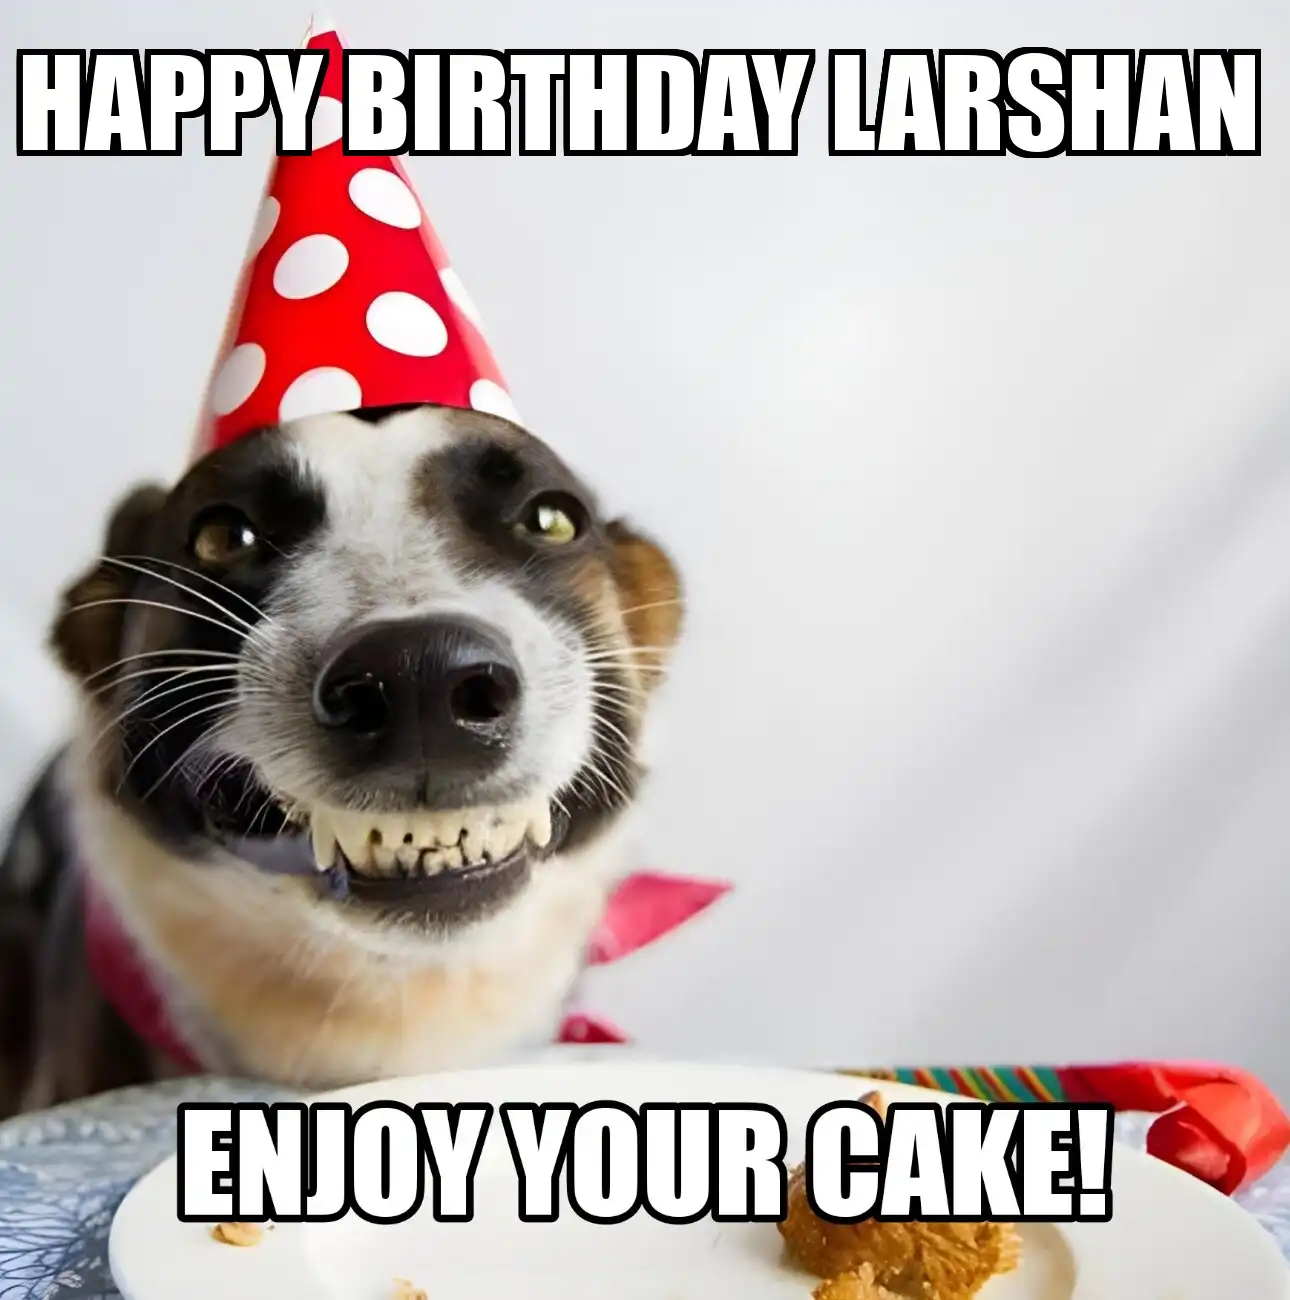 Happy Birthday Larshan Enjoy Your Cake Dog Meme